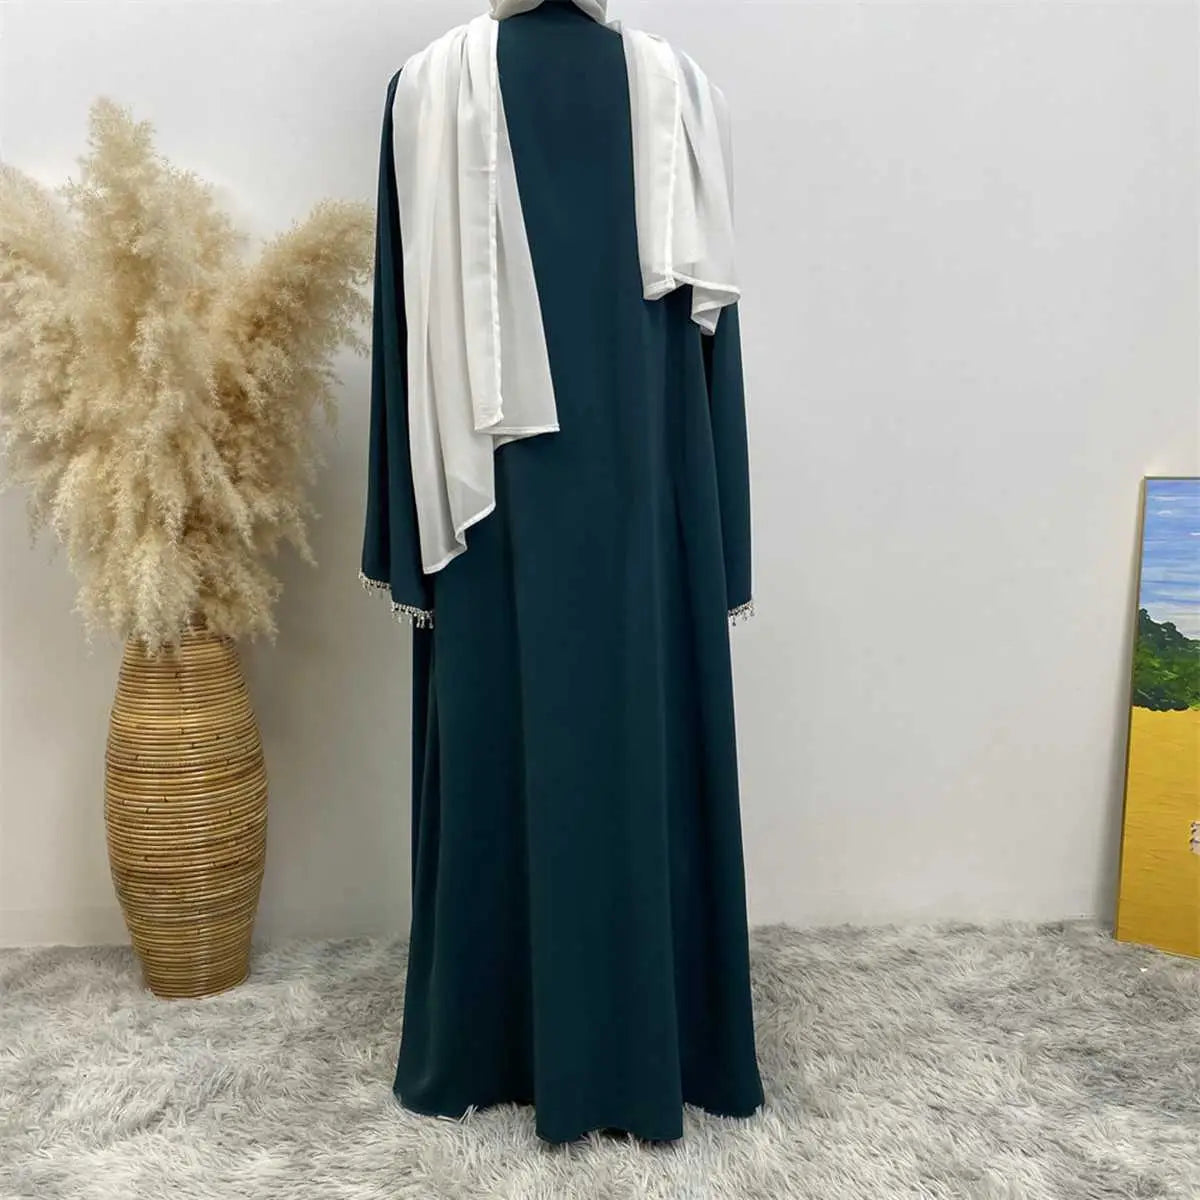 2 Pieces Set Rhinestone Open Abaya Dress With Inner Sleeveless Dress And Belt